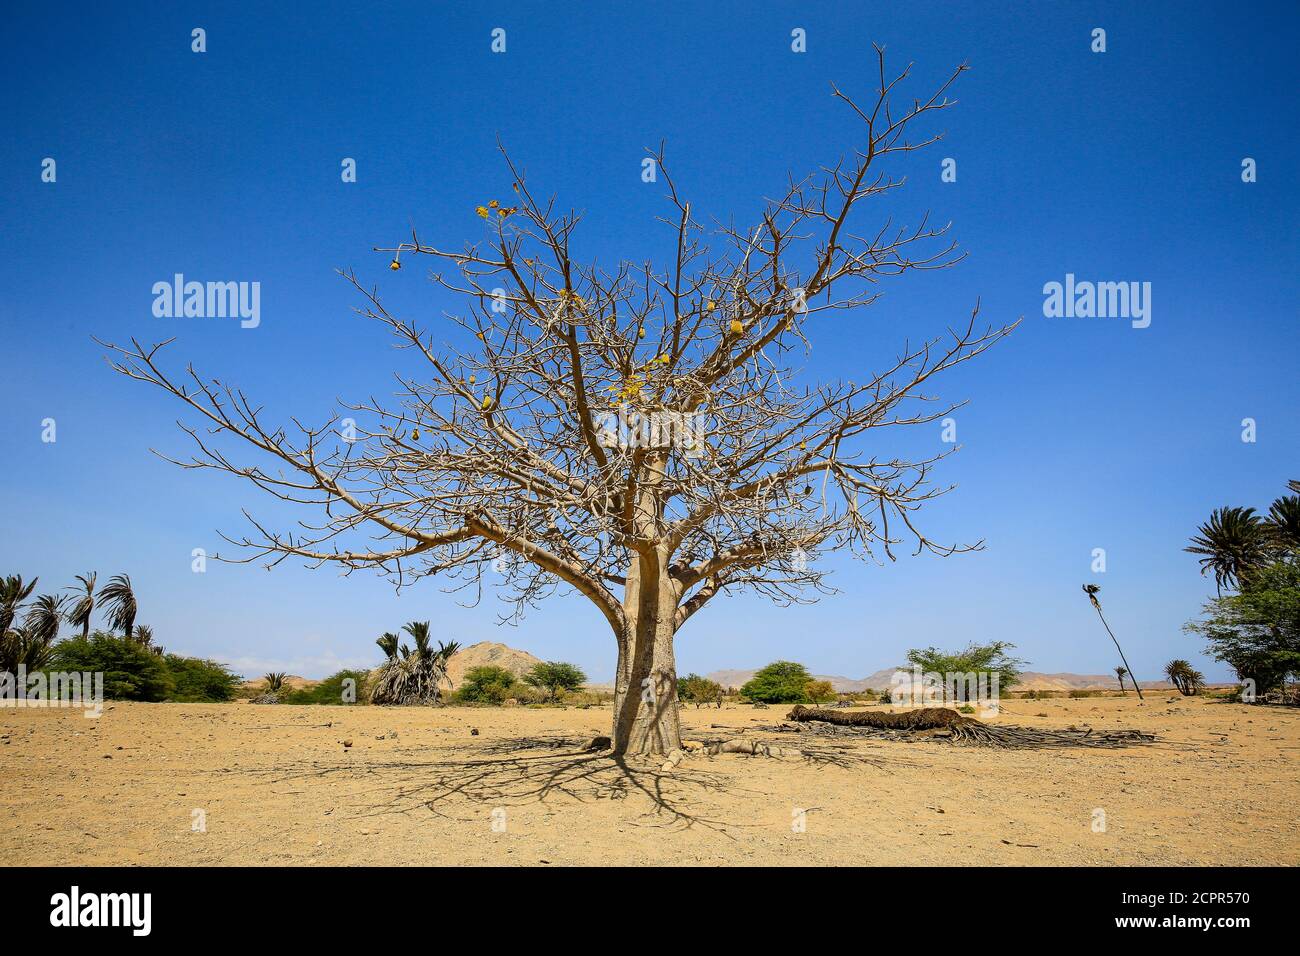 Fonte Vincente, Boa Vista, Cape Verde - African baobab tree, baobab in the Fonts Vincente oasis. Stock Photo